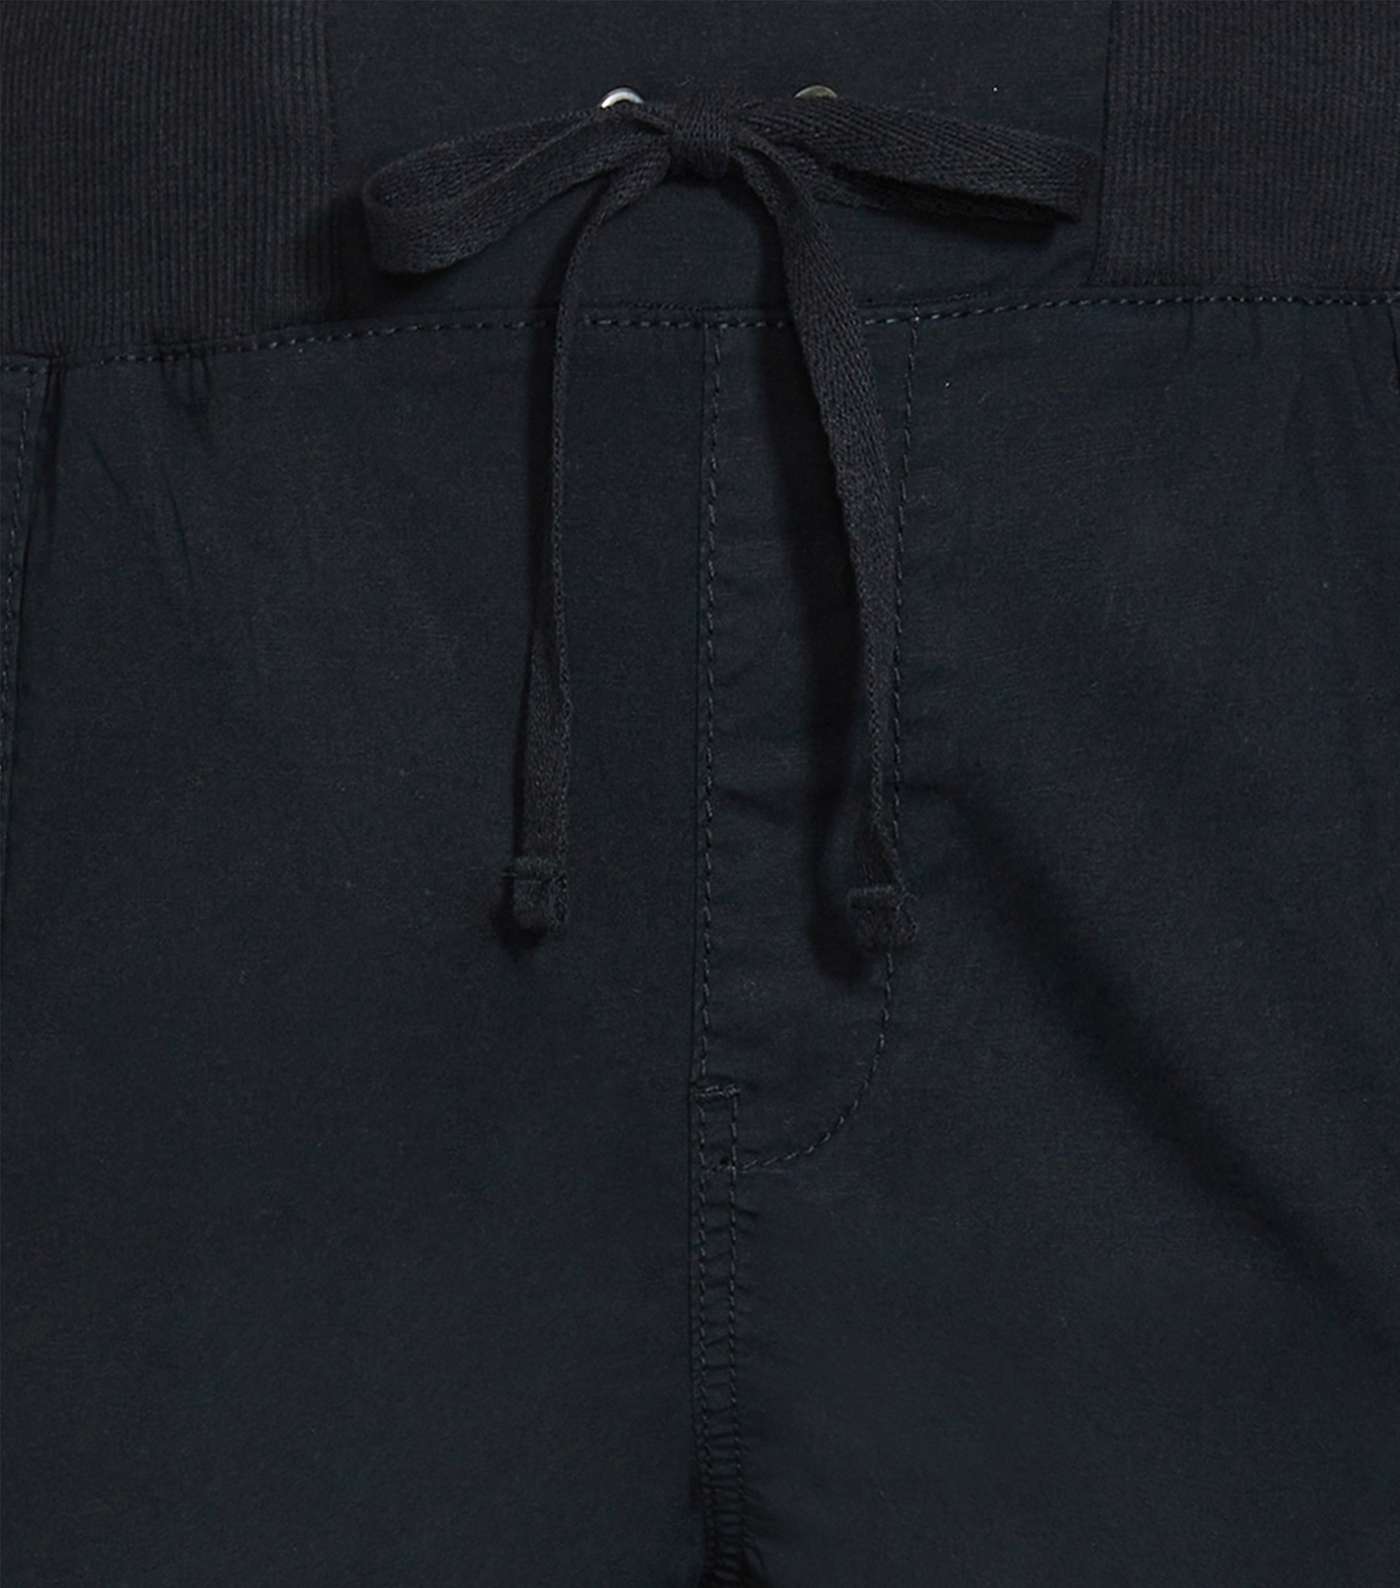 Evans Curves Black 3/4 Trousers Image 4